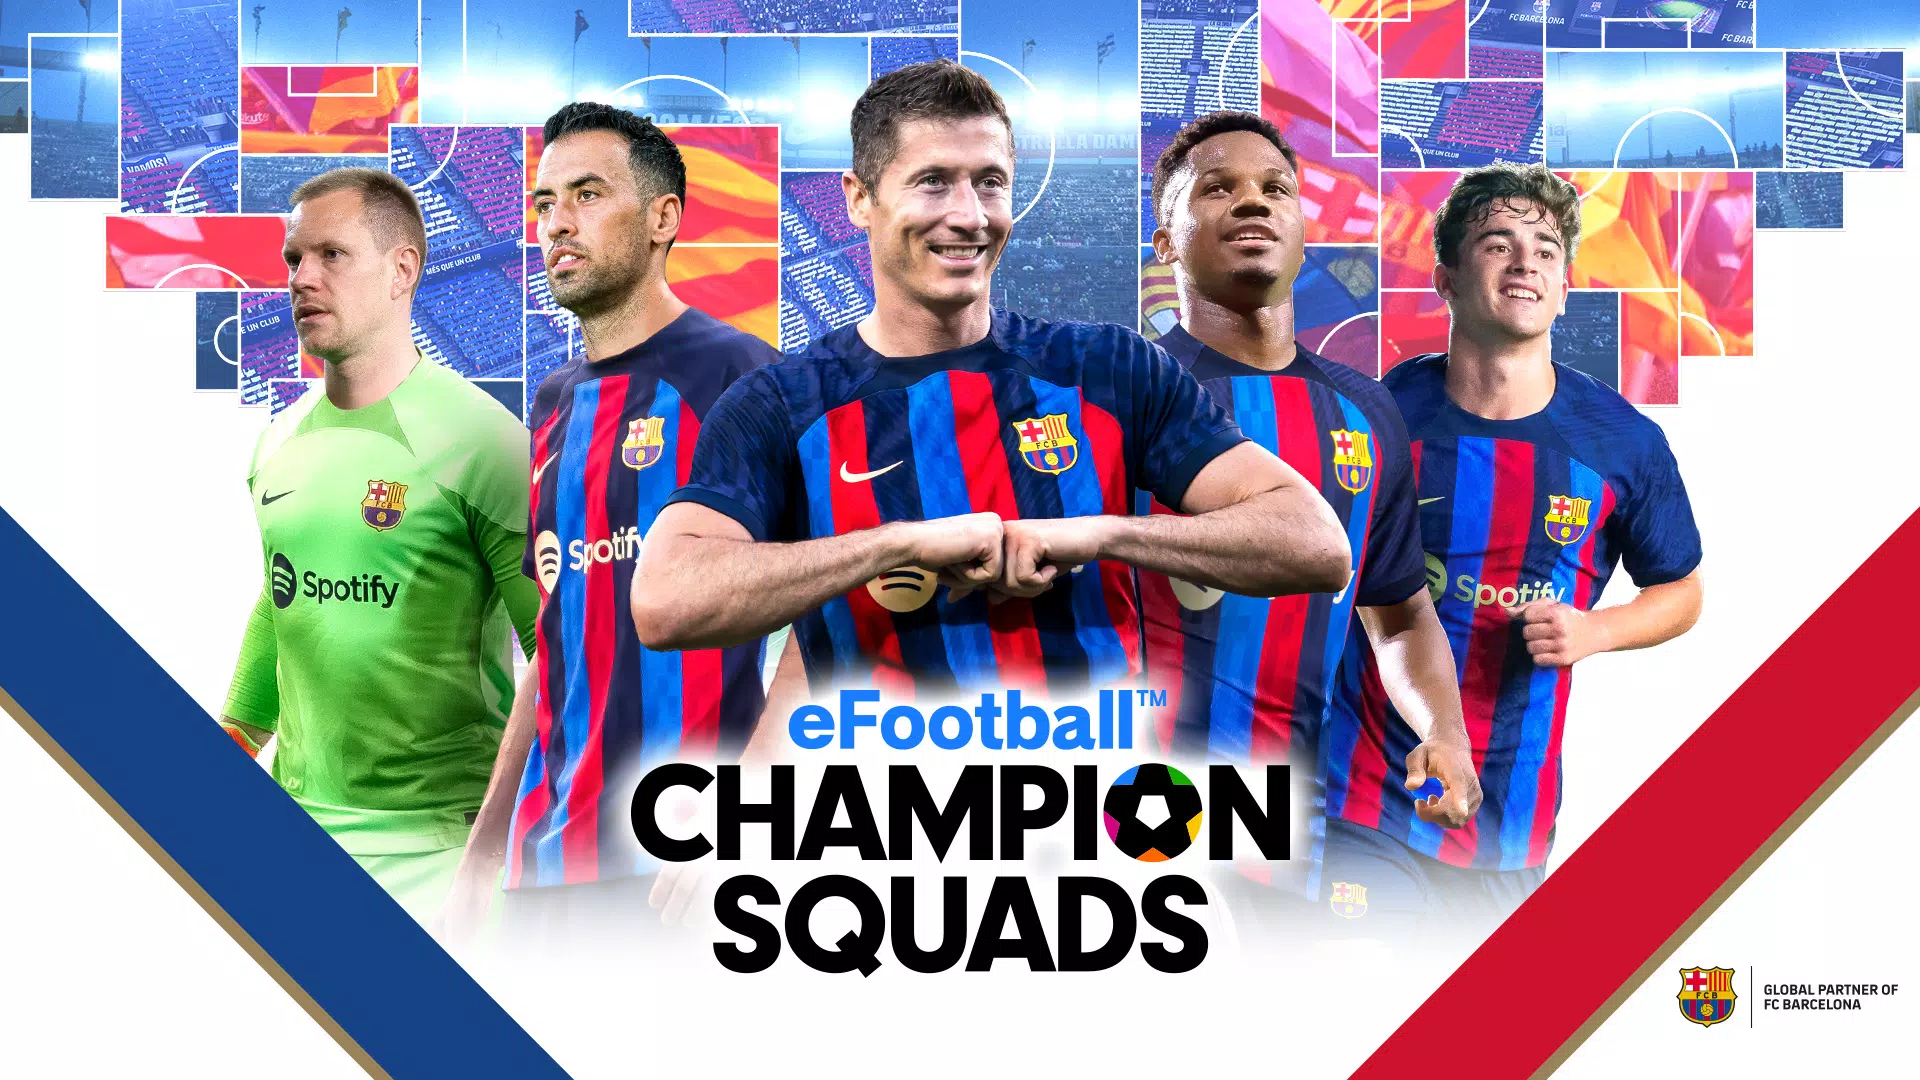 Tải Xuống Apk Efootball™ Champion Squads Cho Android